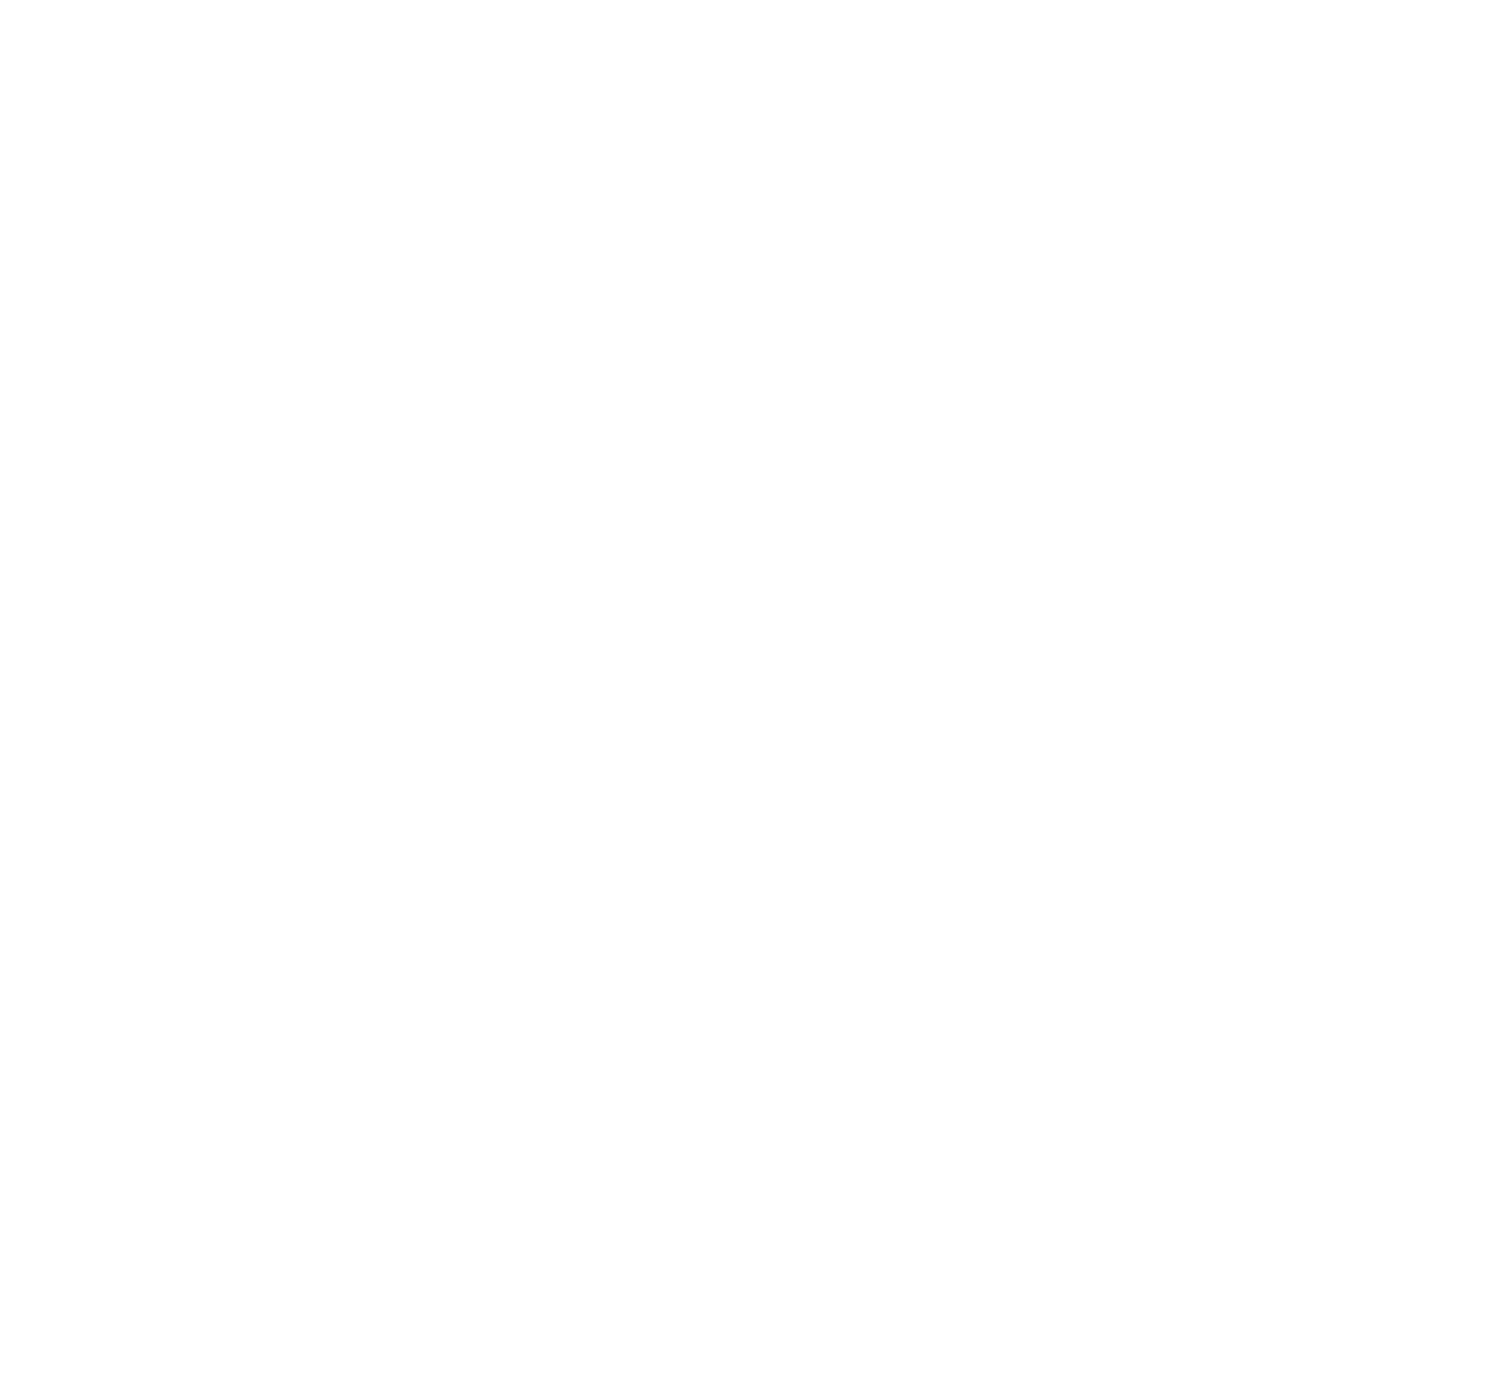 Canadian Screen awards nominee laurel